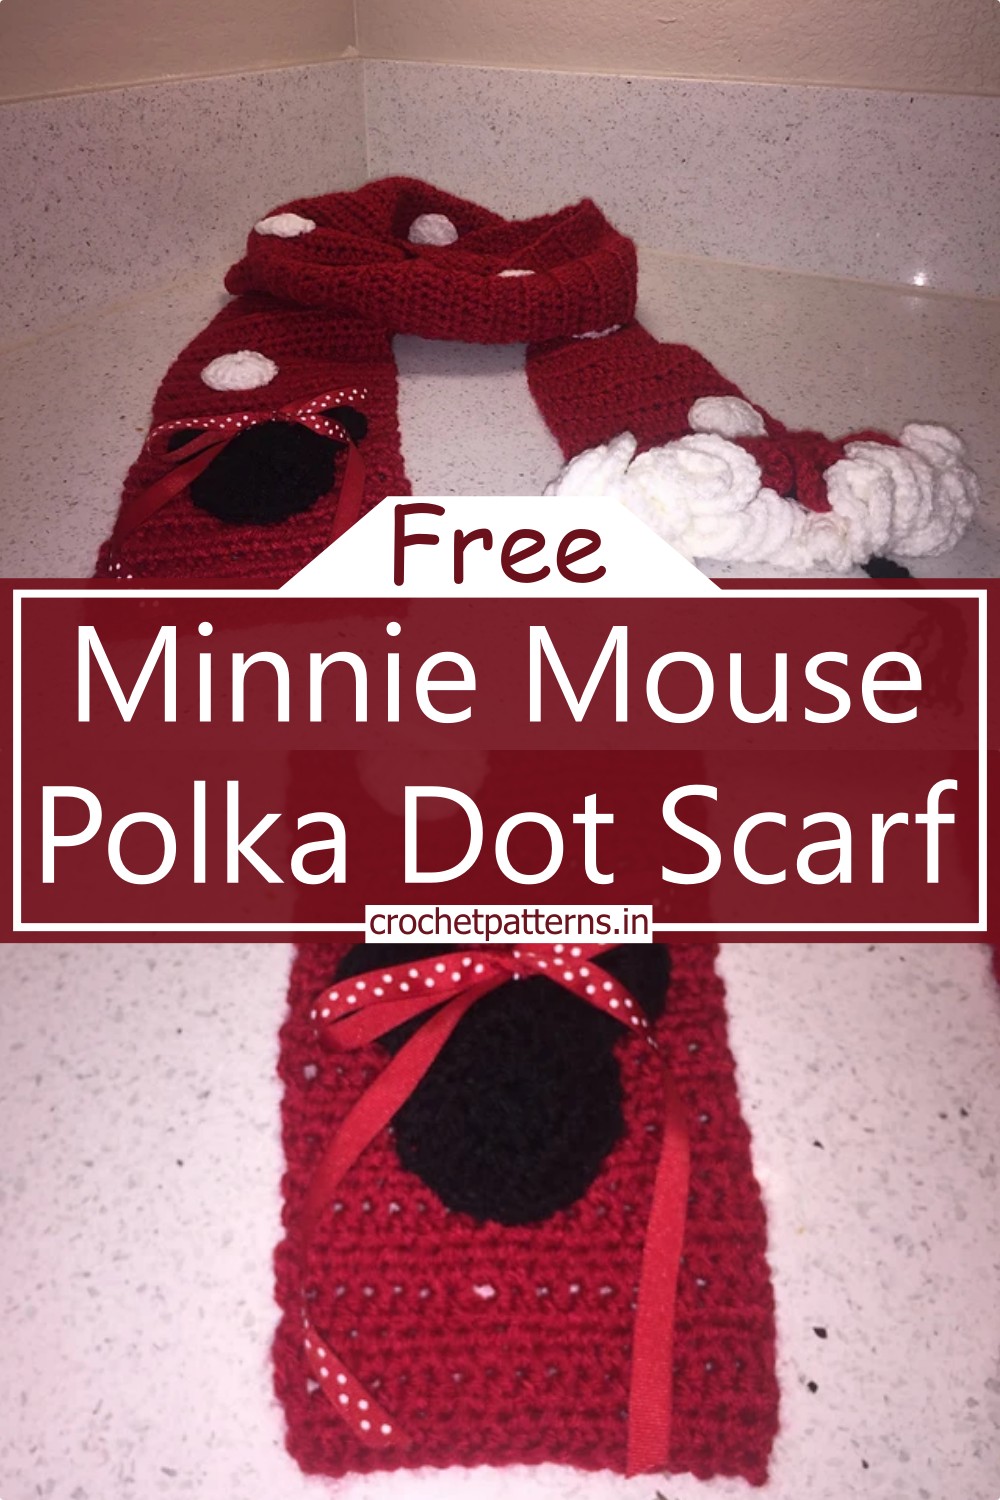 Minnie Mouse Polka Dot Scarf